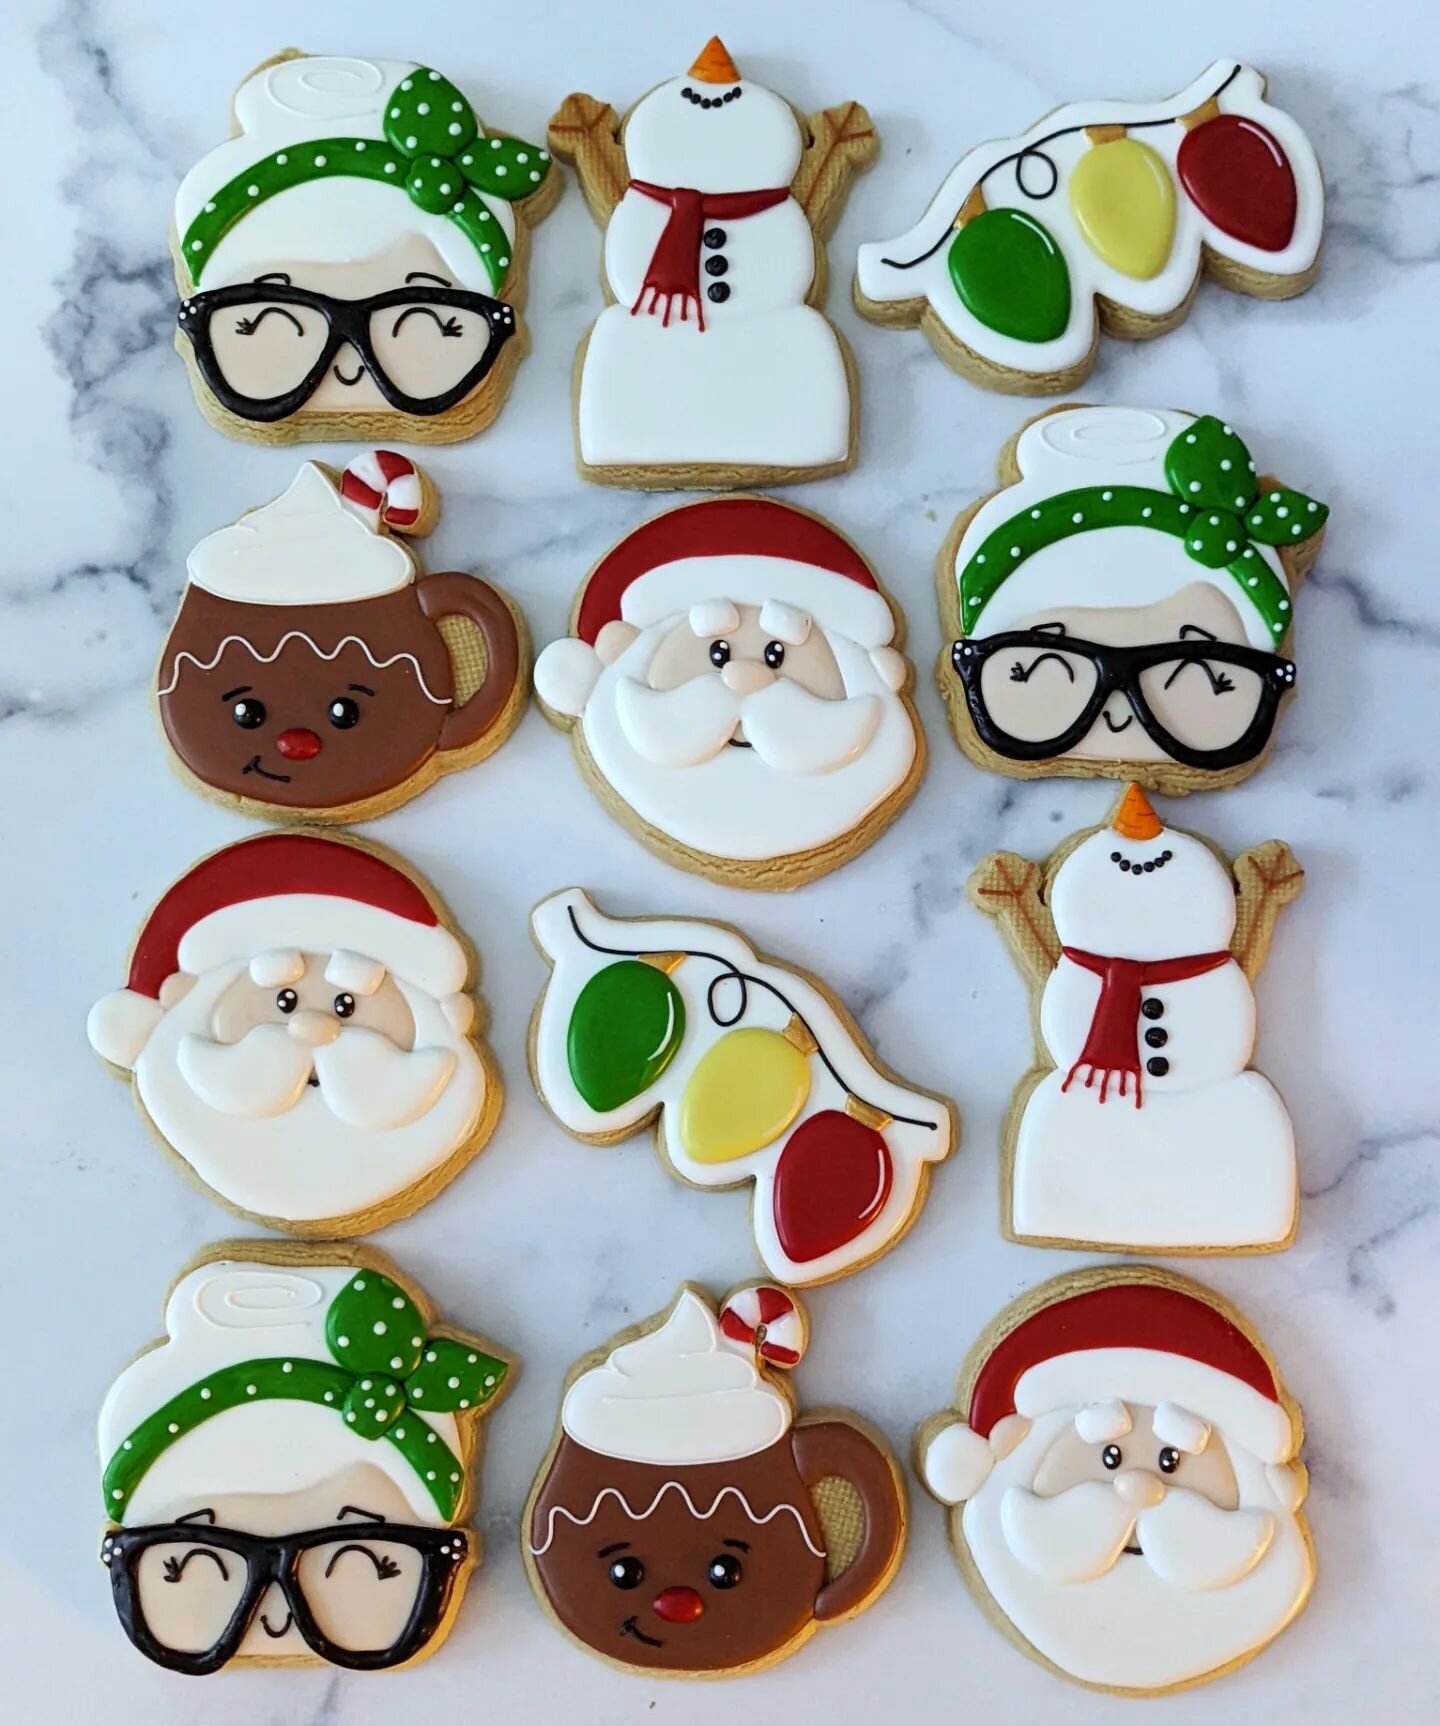 🎶Have a holly jolly Christmas! 🎶 🎄🎅
.
#MerryChristmas #Holidays #CustomCookies #SugarCookies #CookieSets #CookieArt #Cookies #SugarArt #EdibleArt #CookieLove #ChristmasCookies #Cookier #HolidayCookies #Snowman #MrsClause #Santa #ChristmasLights #